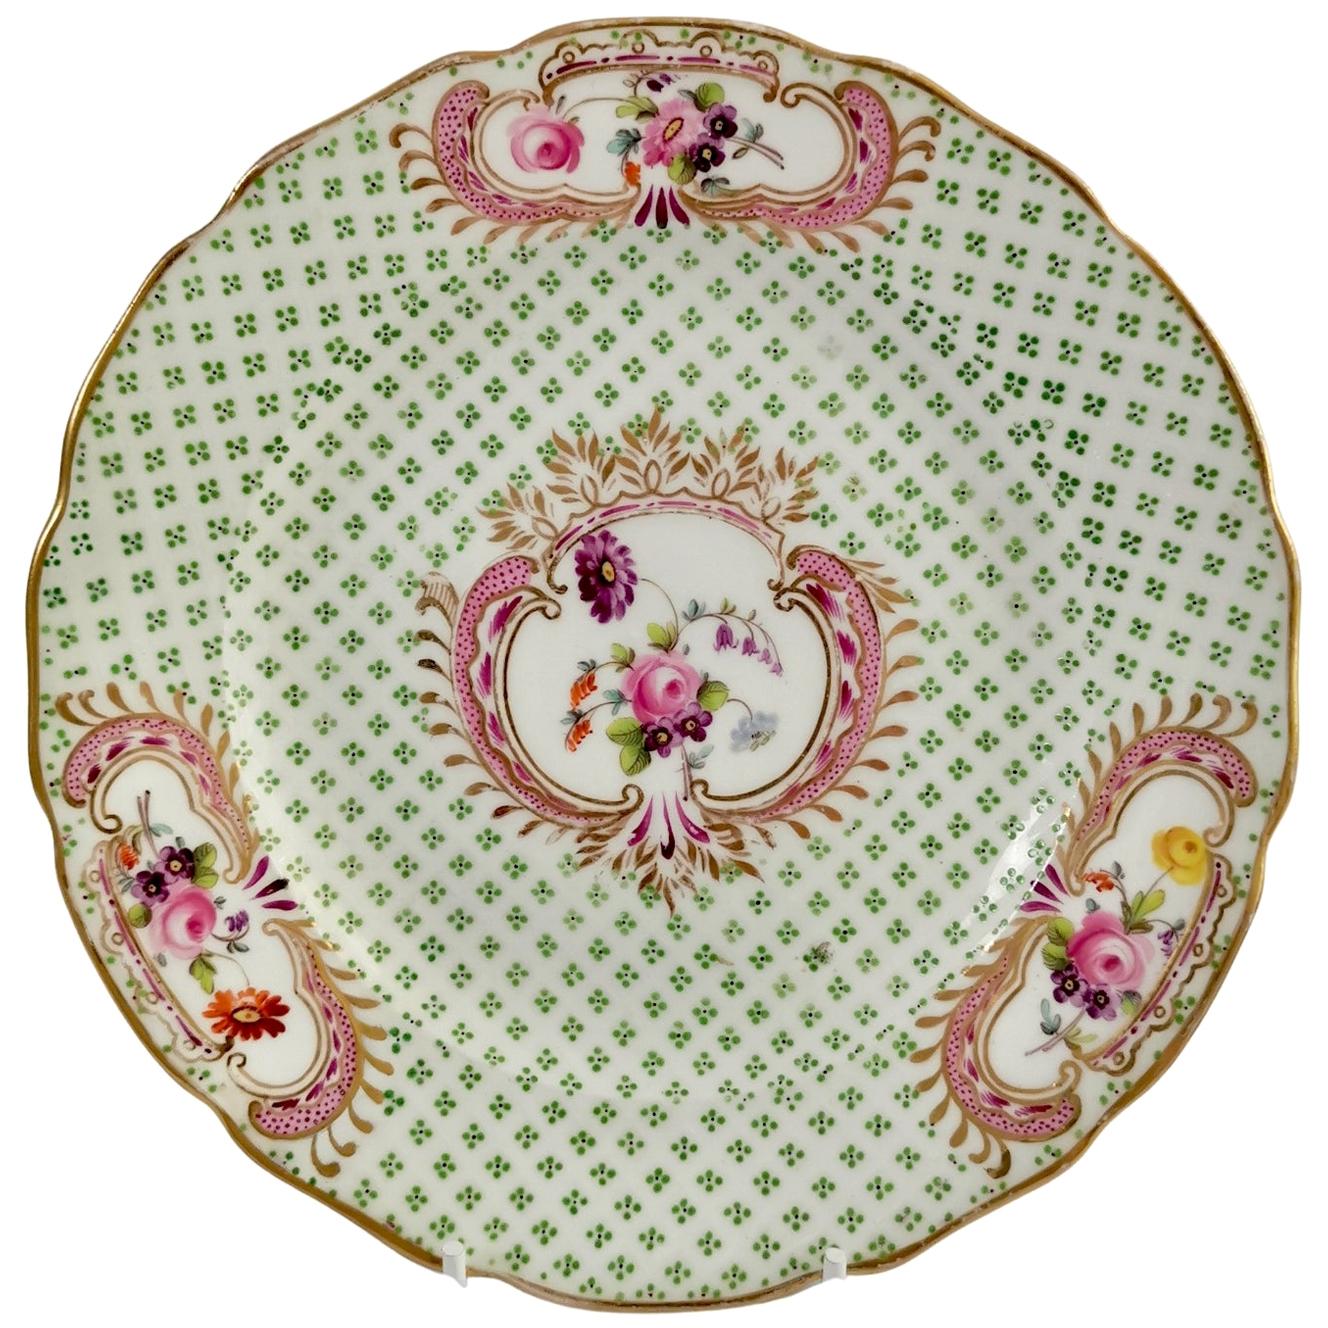 Coalport Small Porcelain Plate, Green and Gilt, Flowers, Regency, circa 1820